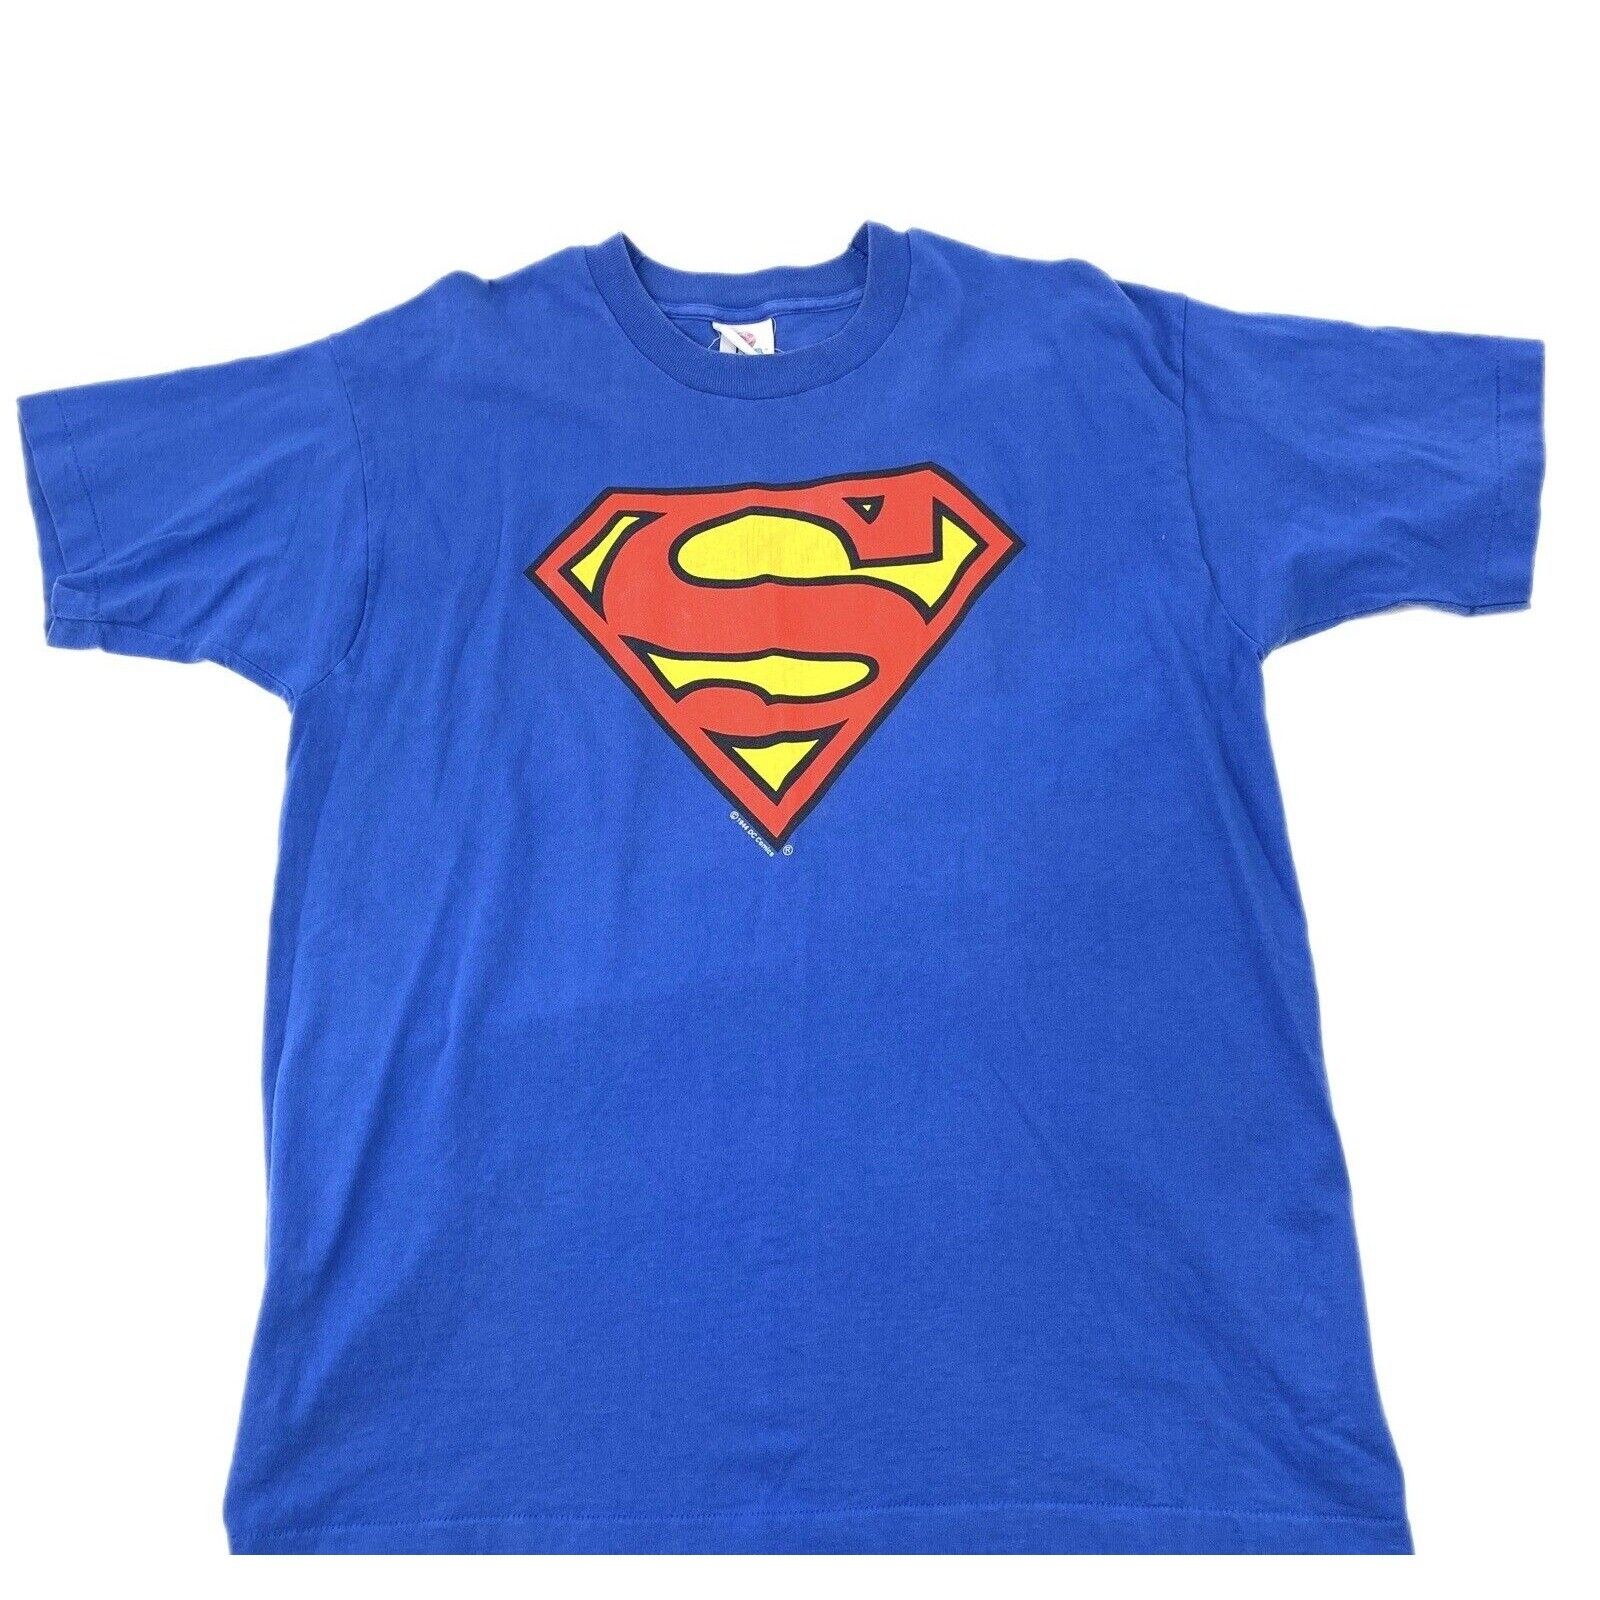 Dc Comics Vintage Superman Shirt Mens XL Blue DC Comics Big Chest Logo Size US XL / EU 56 / 4 - 1 Preview